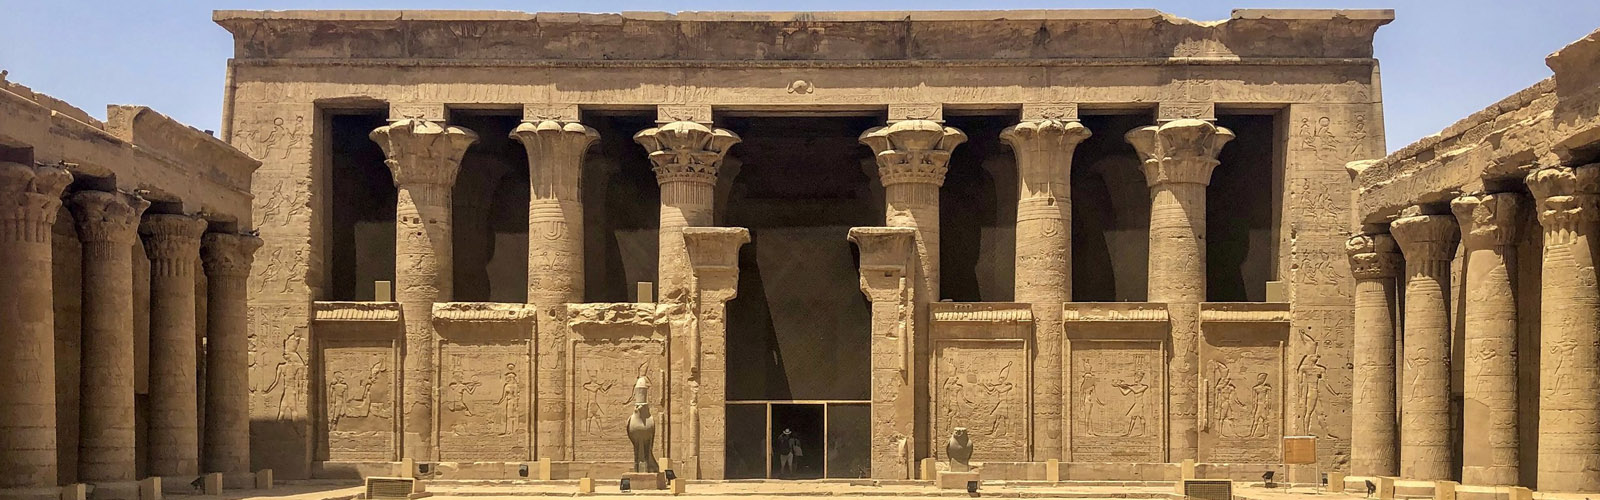 Edfu Temple_Egypt